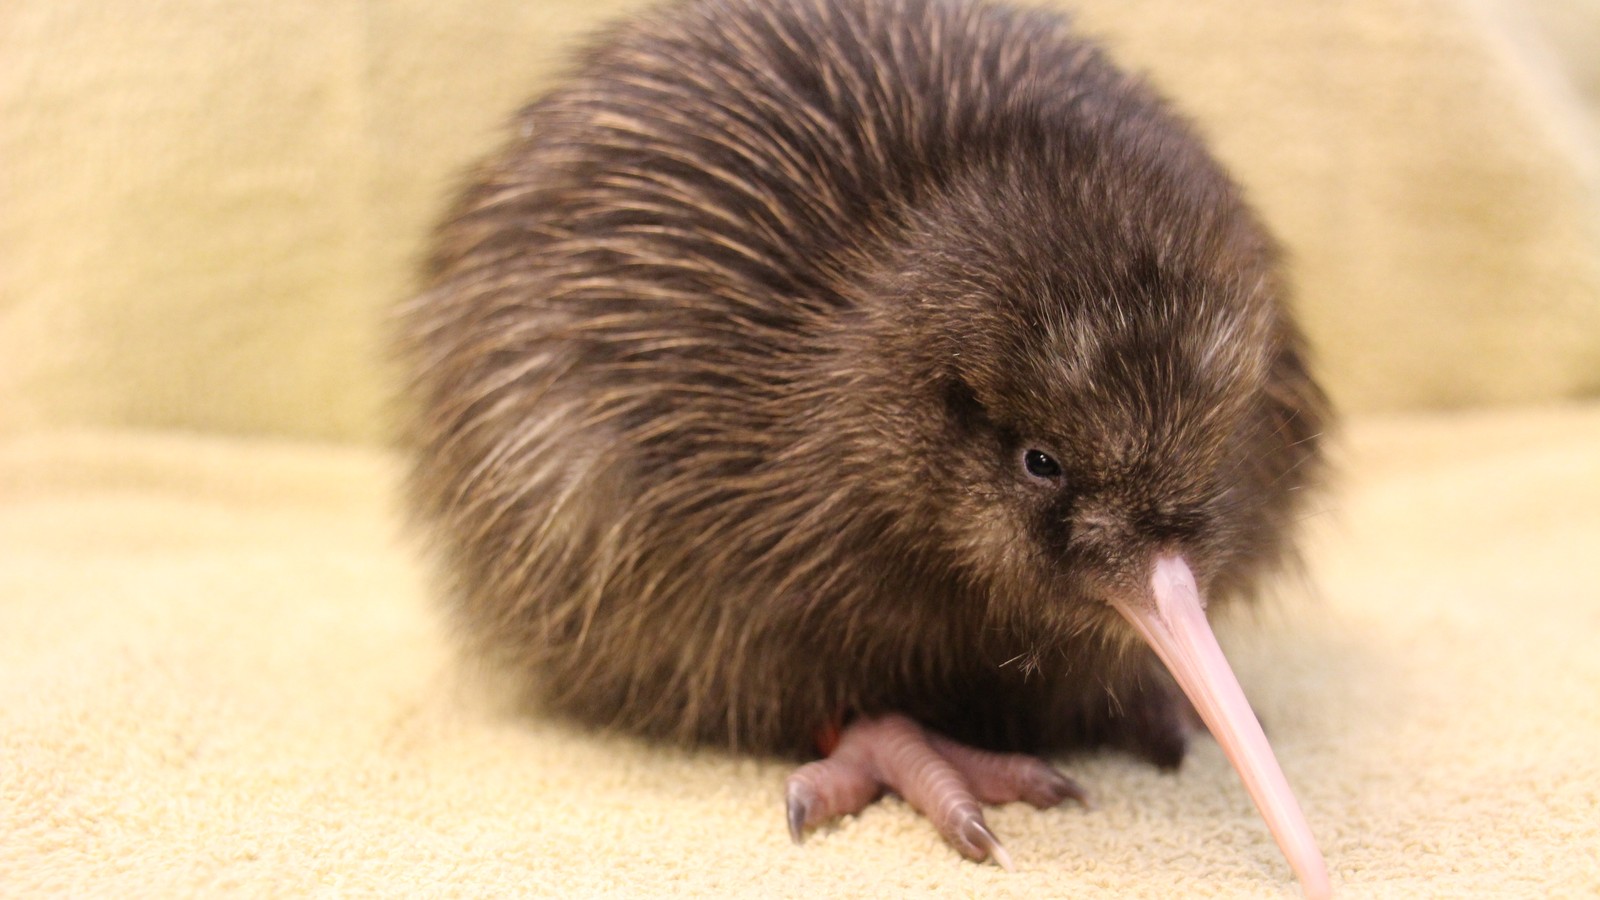 kiwi hatching